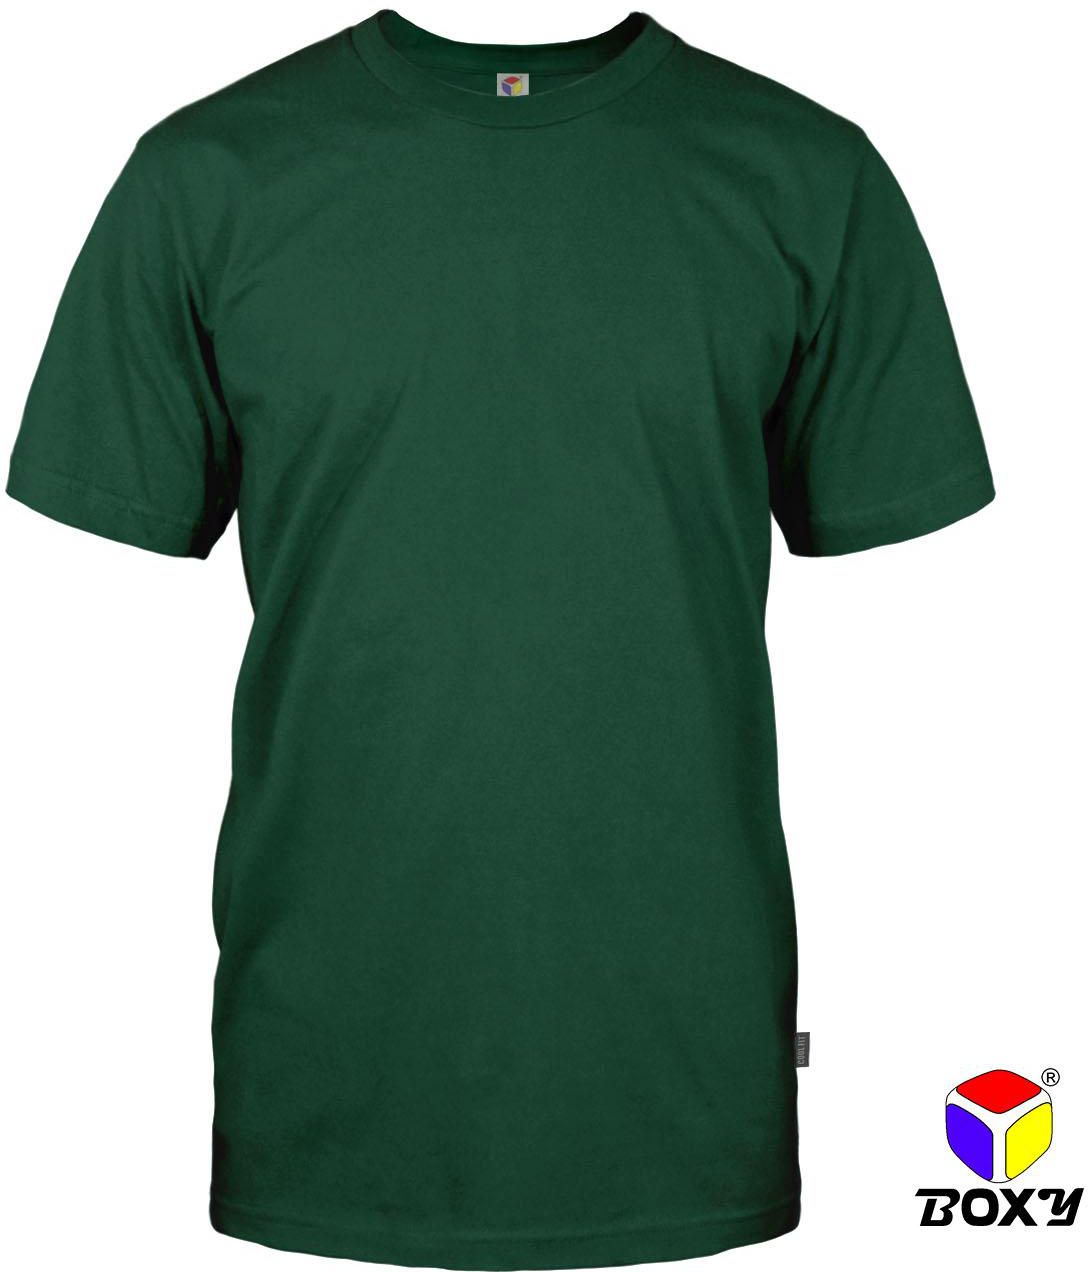 Boxy Microfiber Round Neck Plain T-shirt - 7 Sizes (Forest Green)